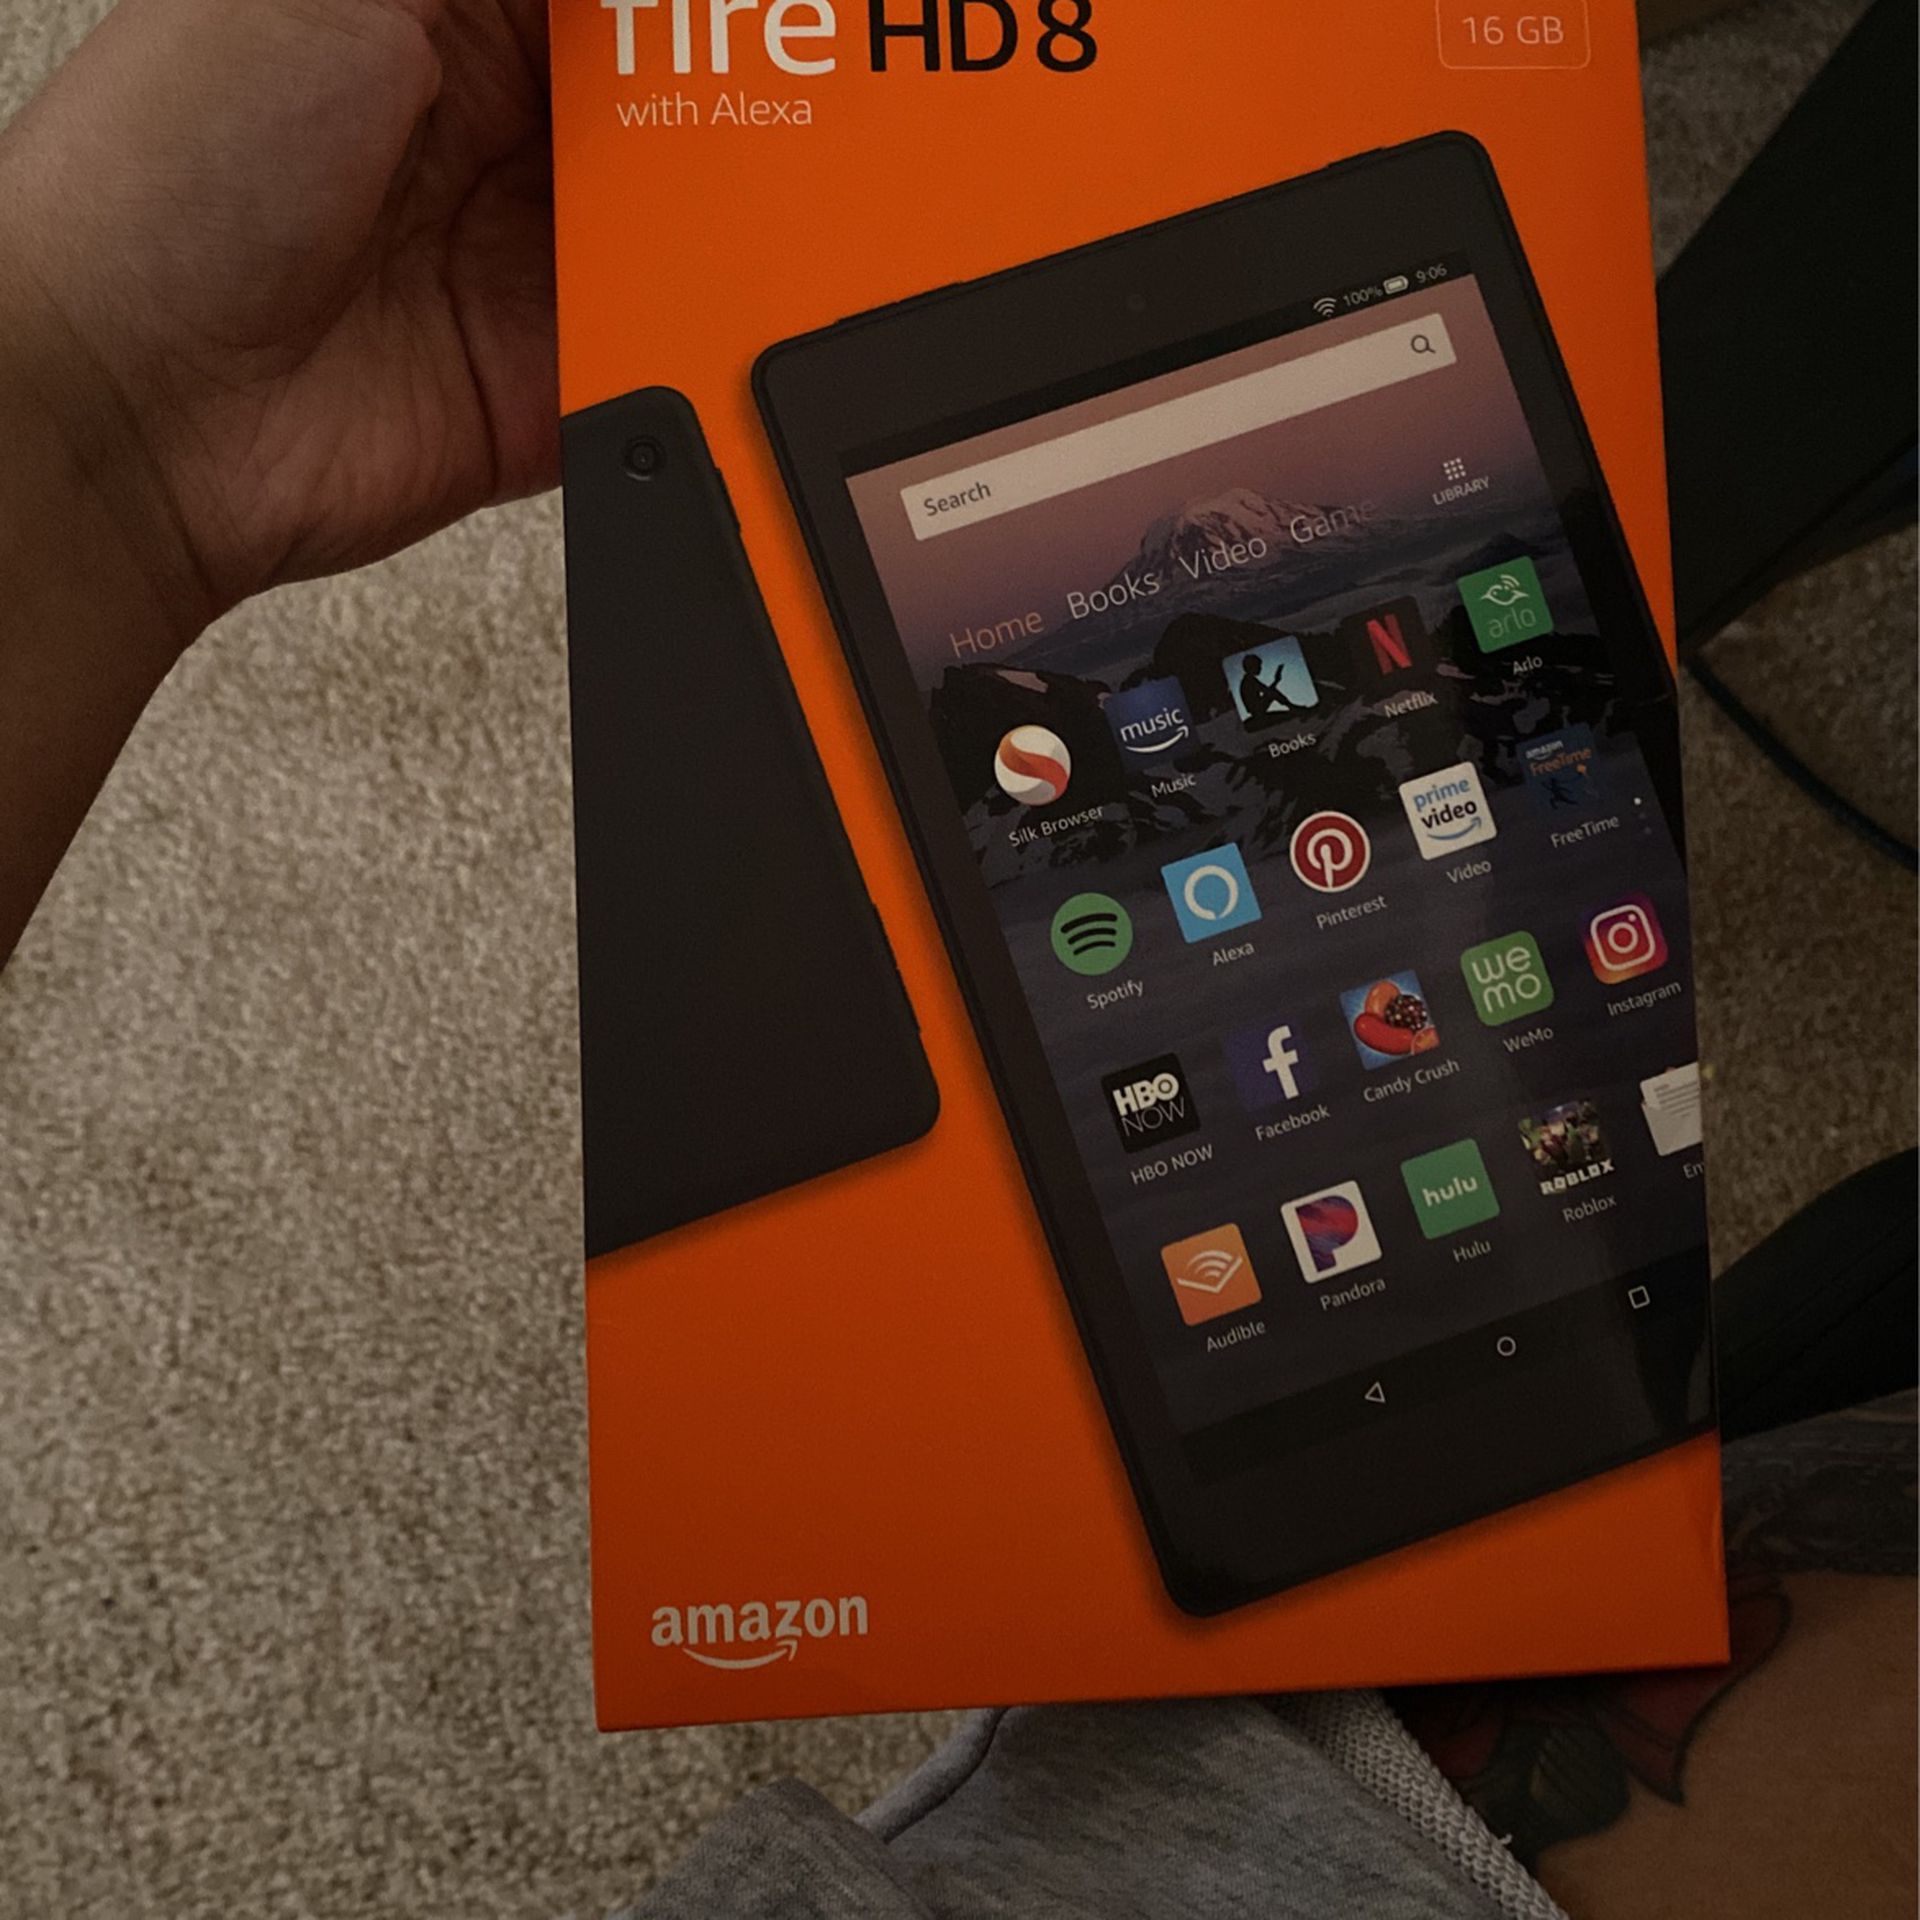 Amazon Fire HD8 (16GB)